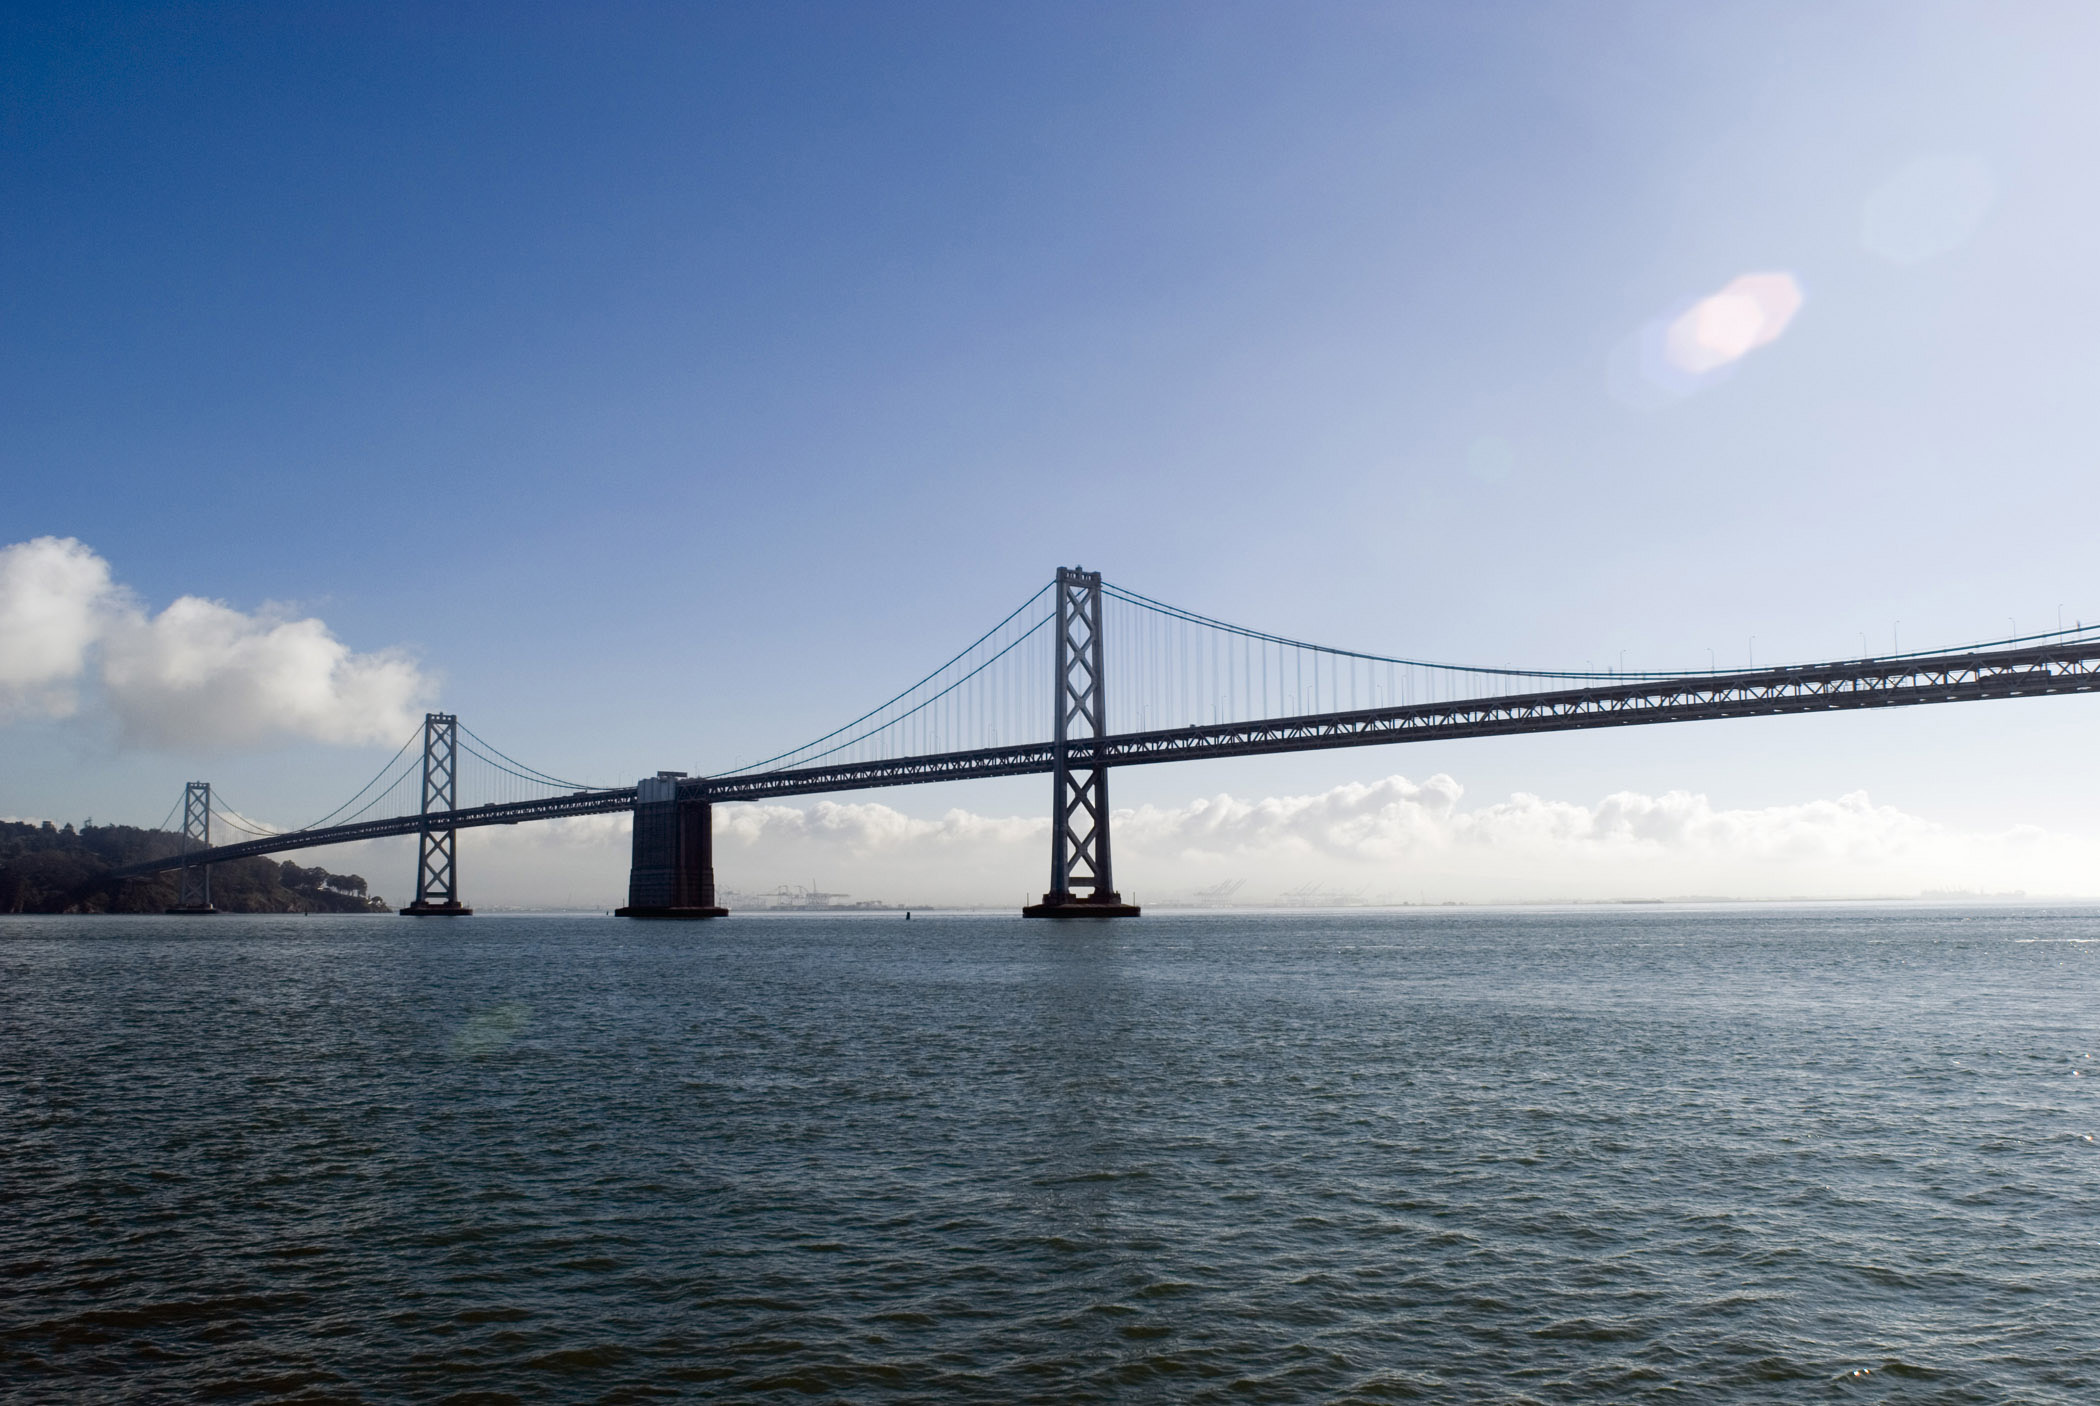 Free Stock photo of San Francisco Bay Bridge | Photoeverywhere